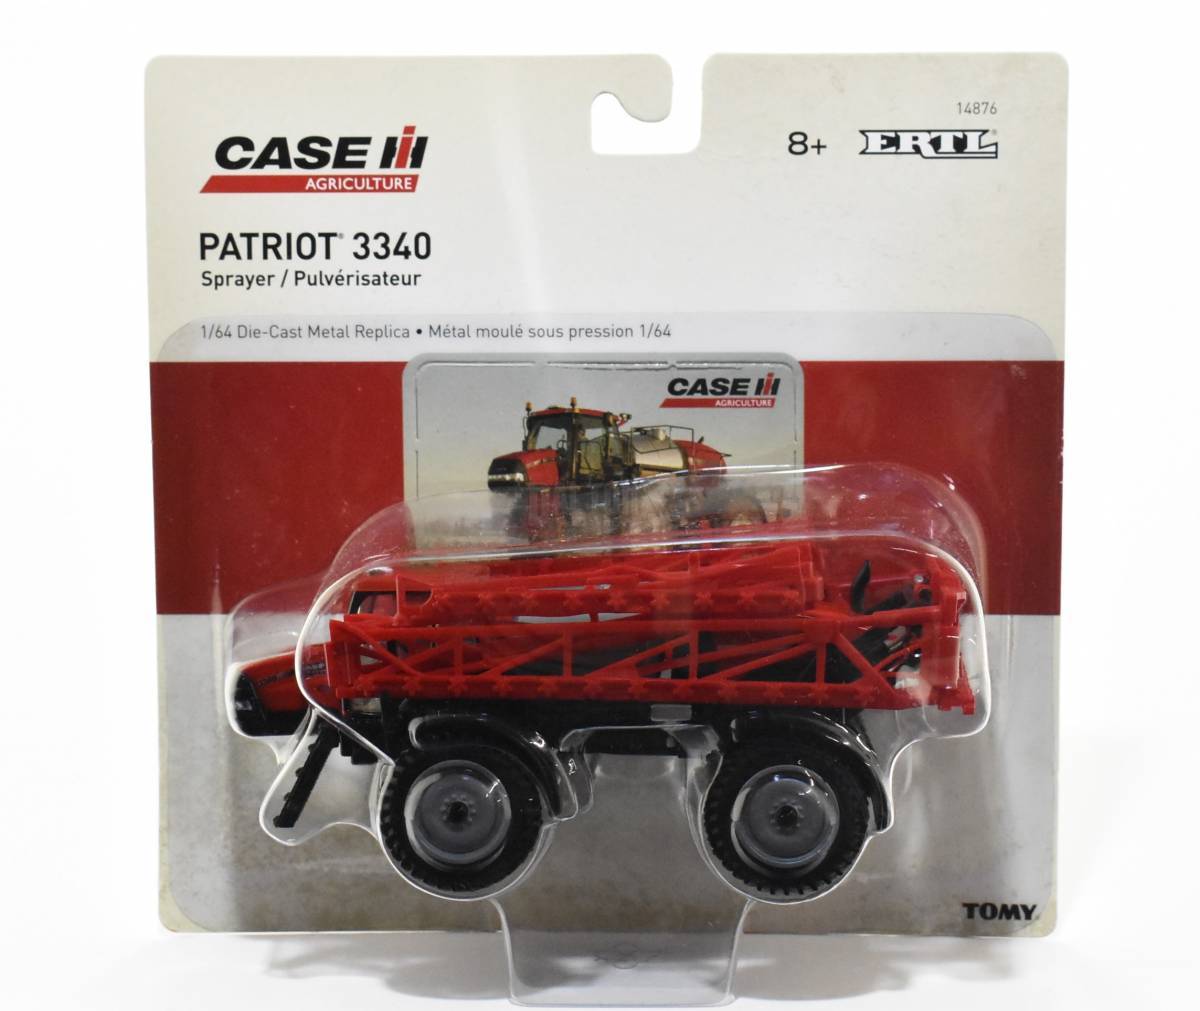 ERTL Case IH Agriculture 1/64 Scale Patriot 3340 Replica Sprayer Toy 